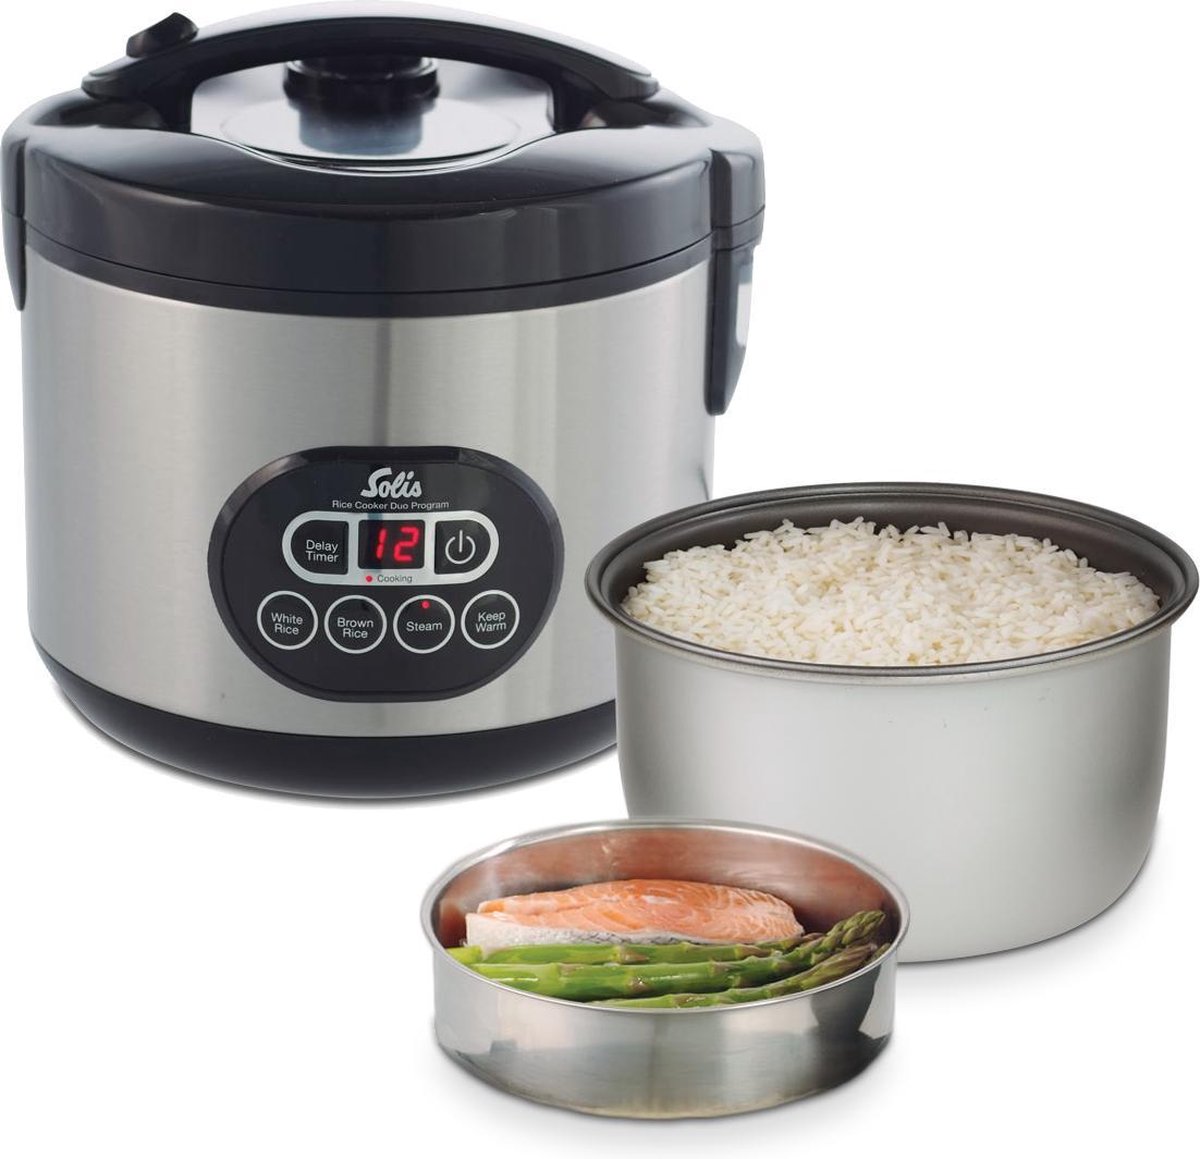 Bol.com Solis Rice Cooker Duo Programm 817 - Rijstkoker en Stoomkoker - Groente Stomer aanbieding